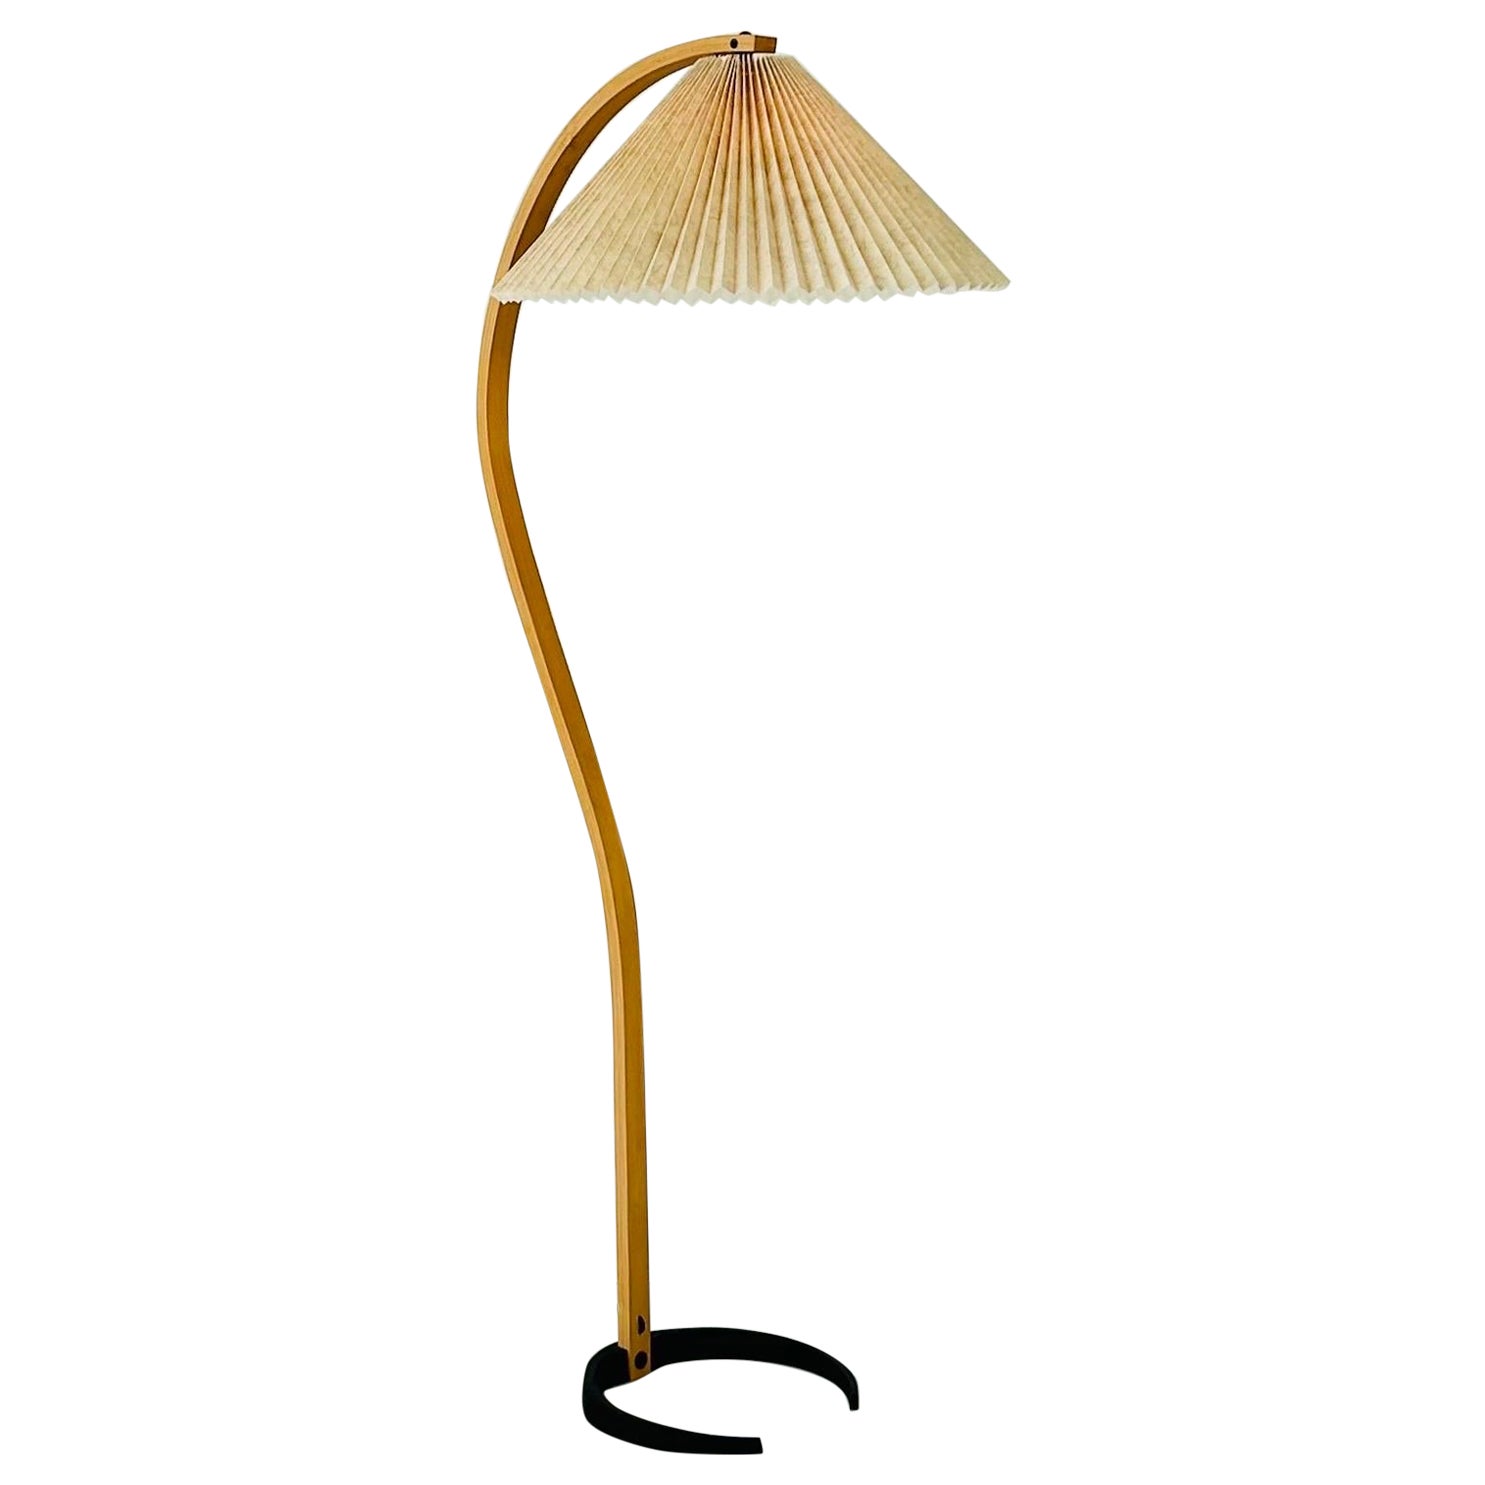 Never-Used Original Danish Caprani Floor Lamp, 1970s, Denmark For Sale